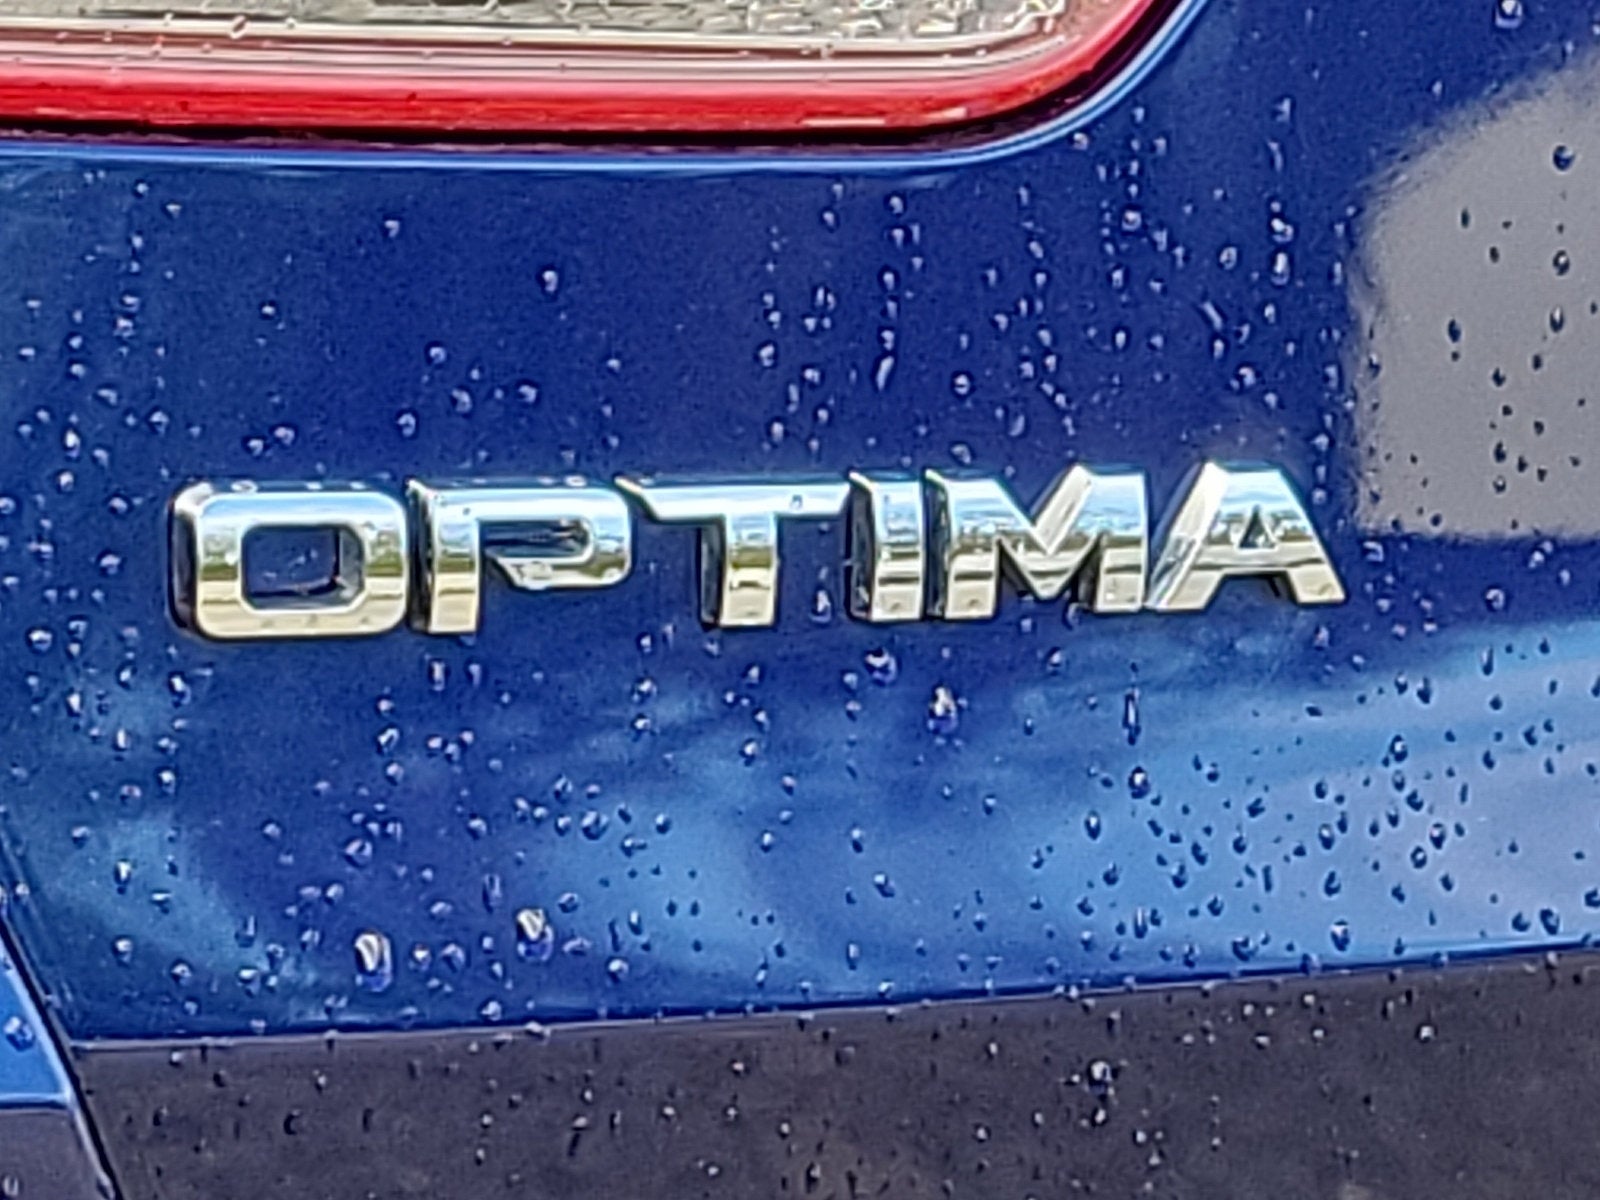 2018 Kia Optima LX